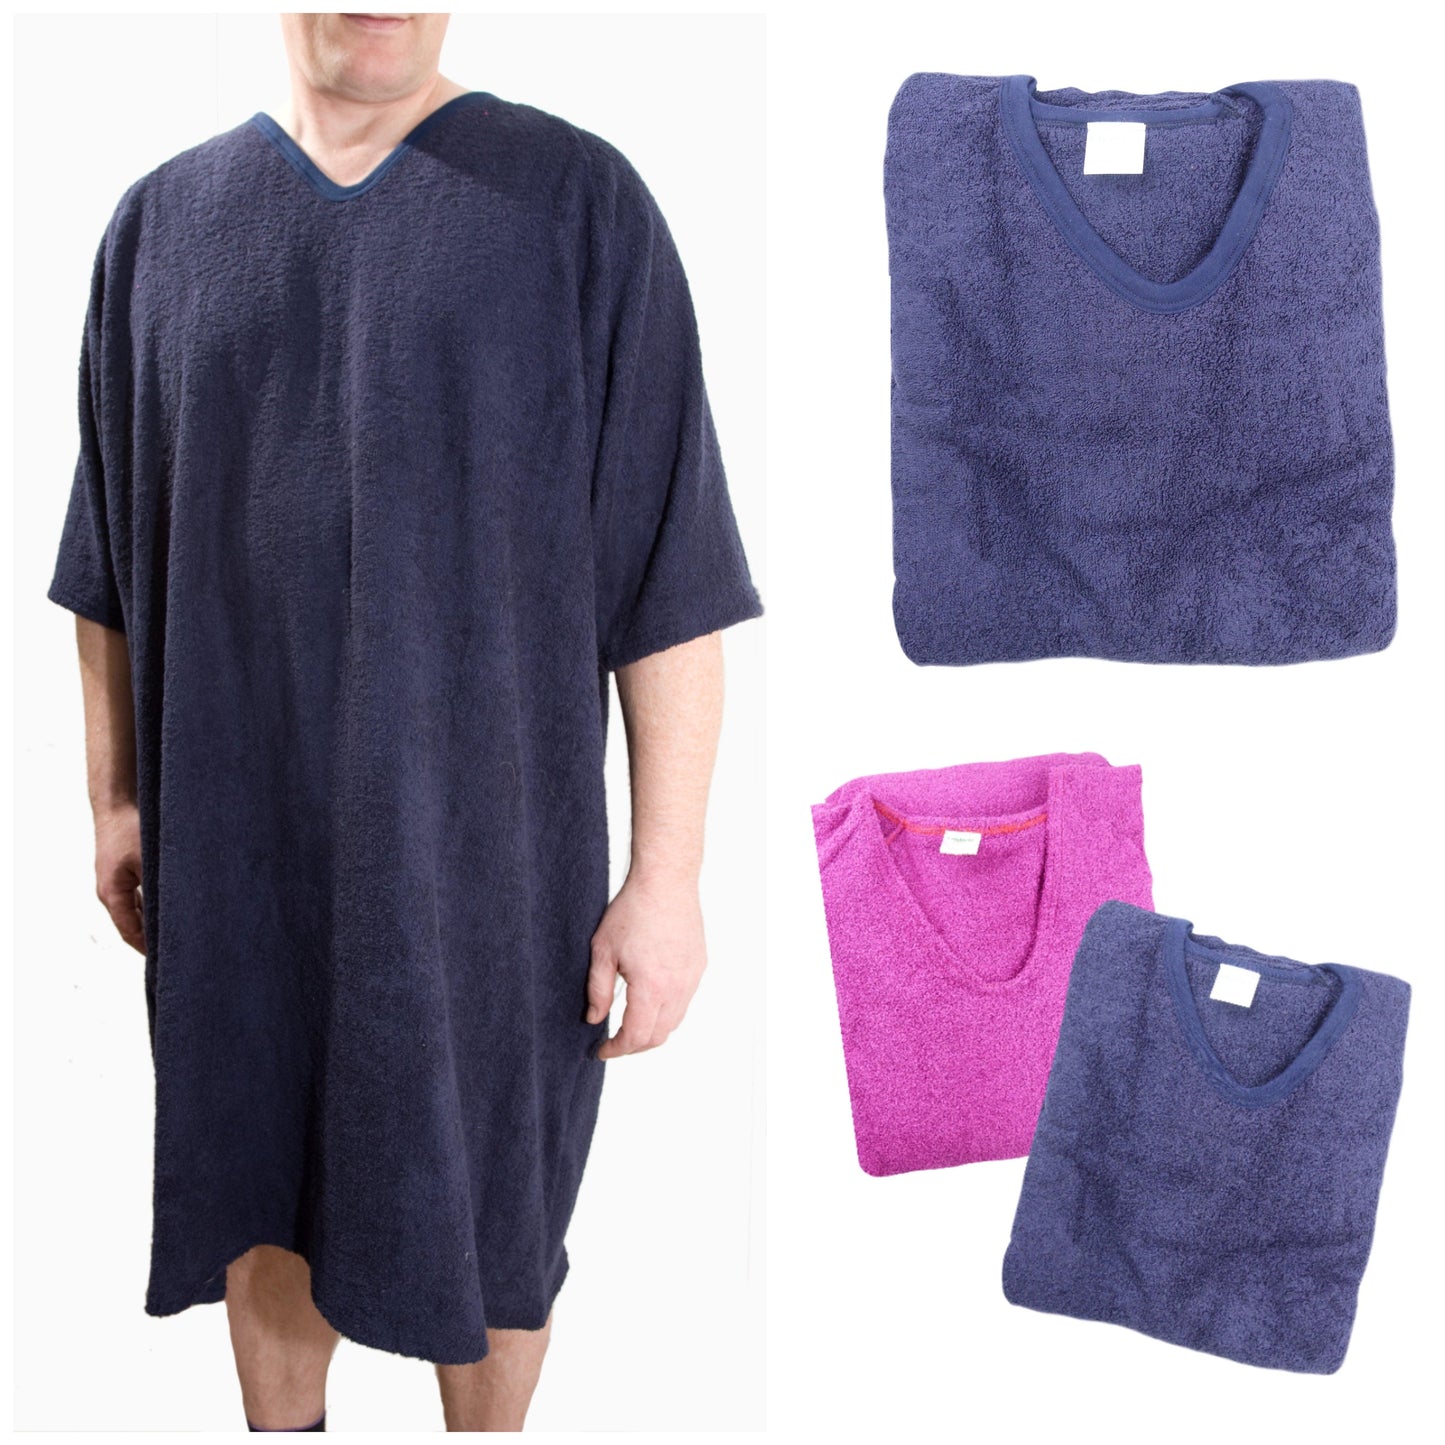 Unisex Adaptive Clothing: Complete Open Back Dri-Me Towelling Shower Robe - M176 - MEDORIS